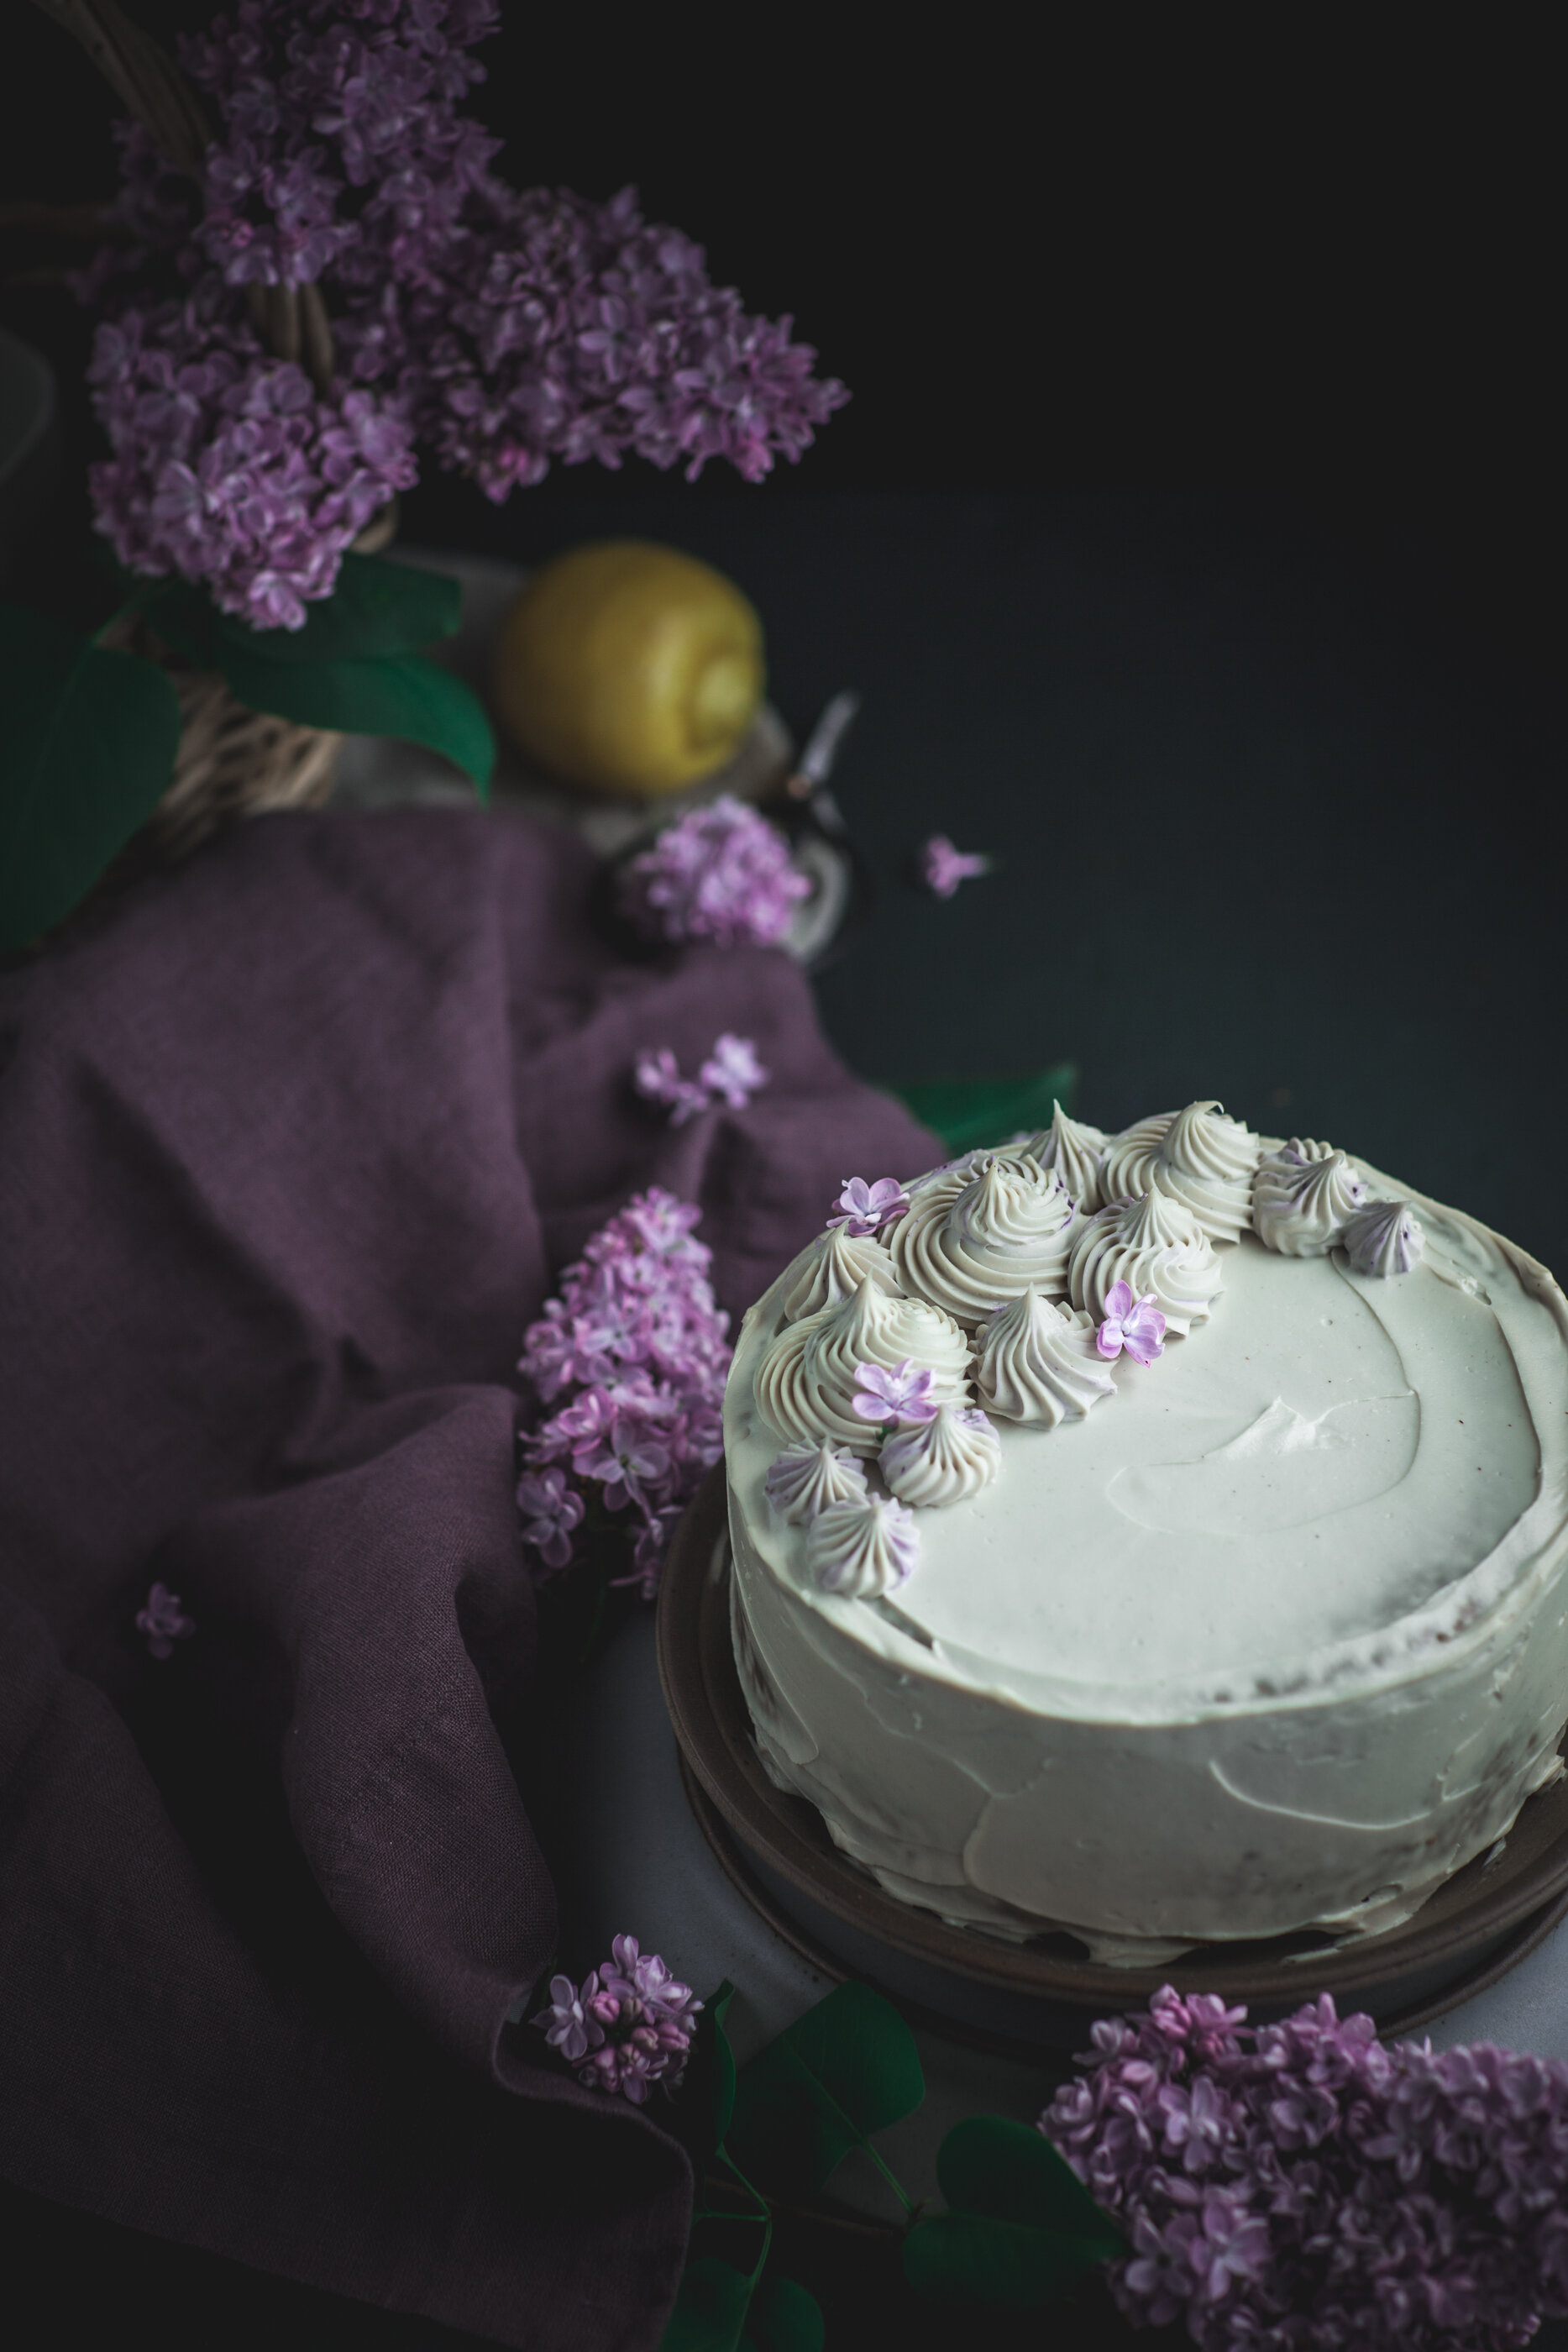 Lemon Cake with Frosting by Melissa Sampedro-9.jpg